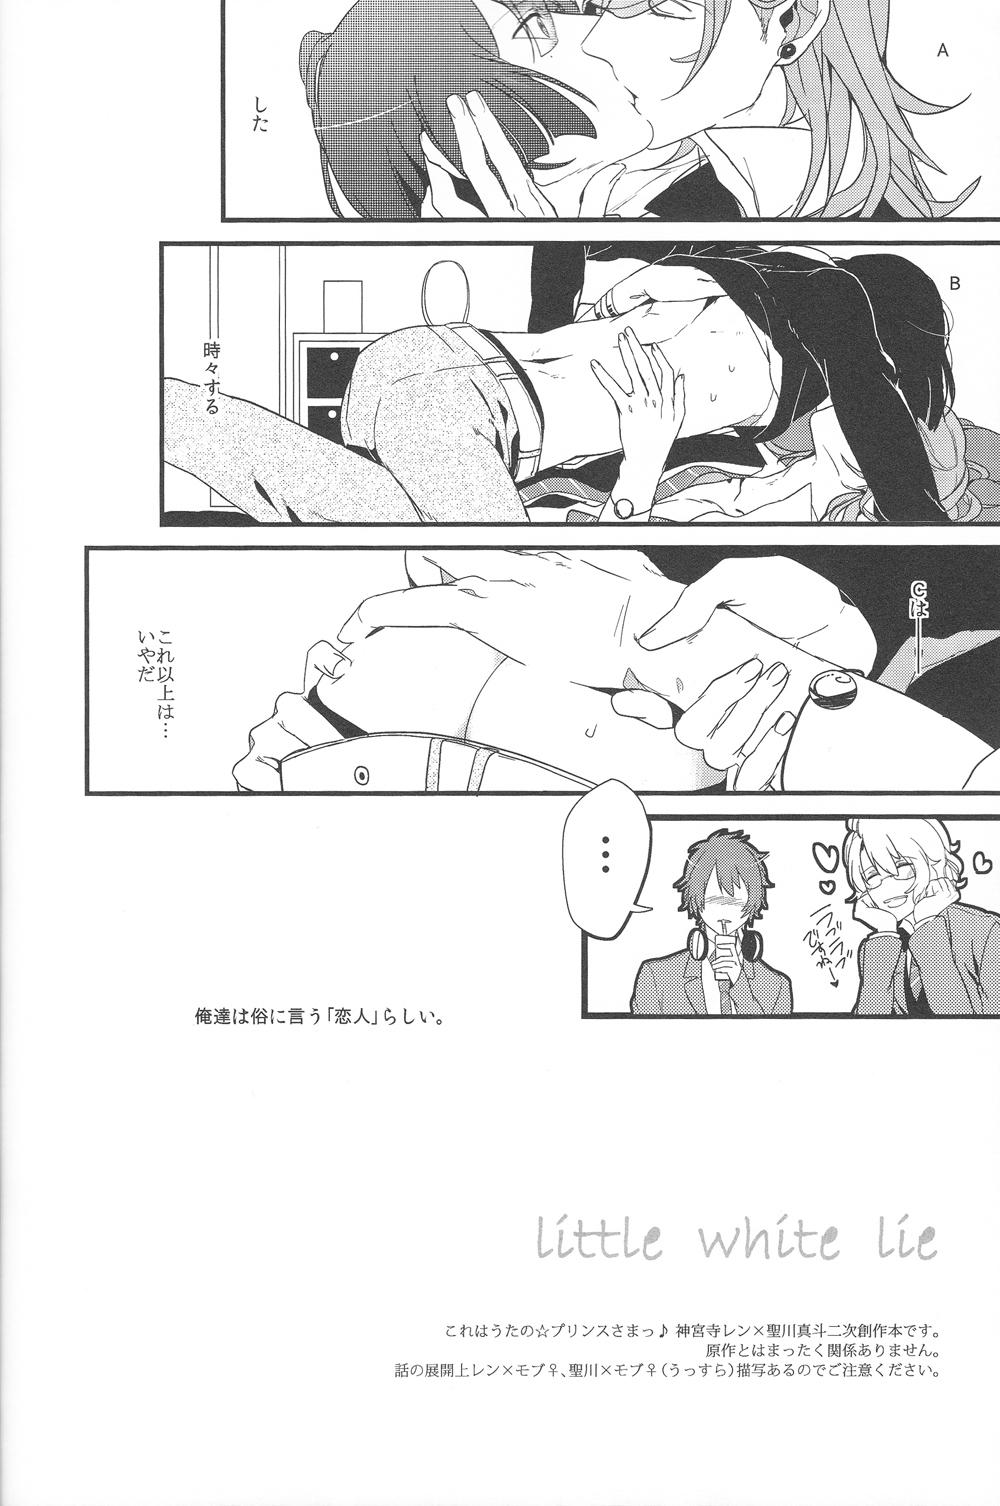 Penis Little White Lie - Uta no prince-sama Teen - Page 3